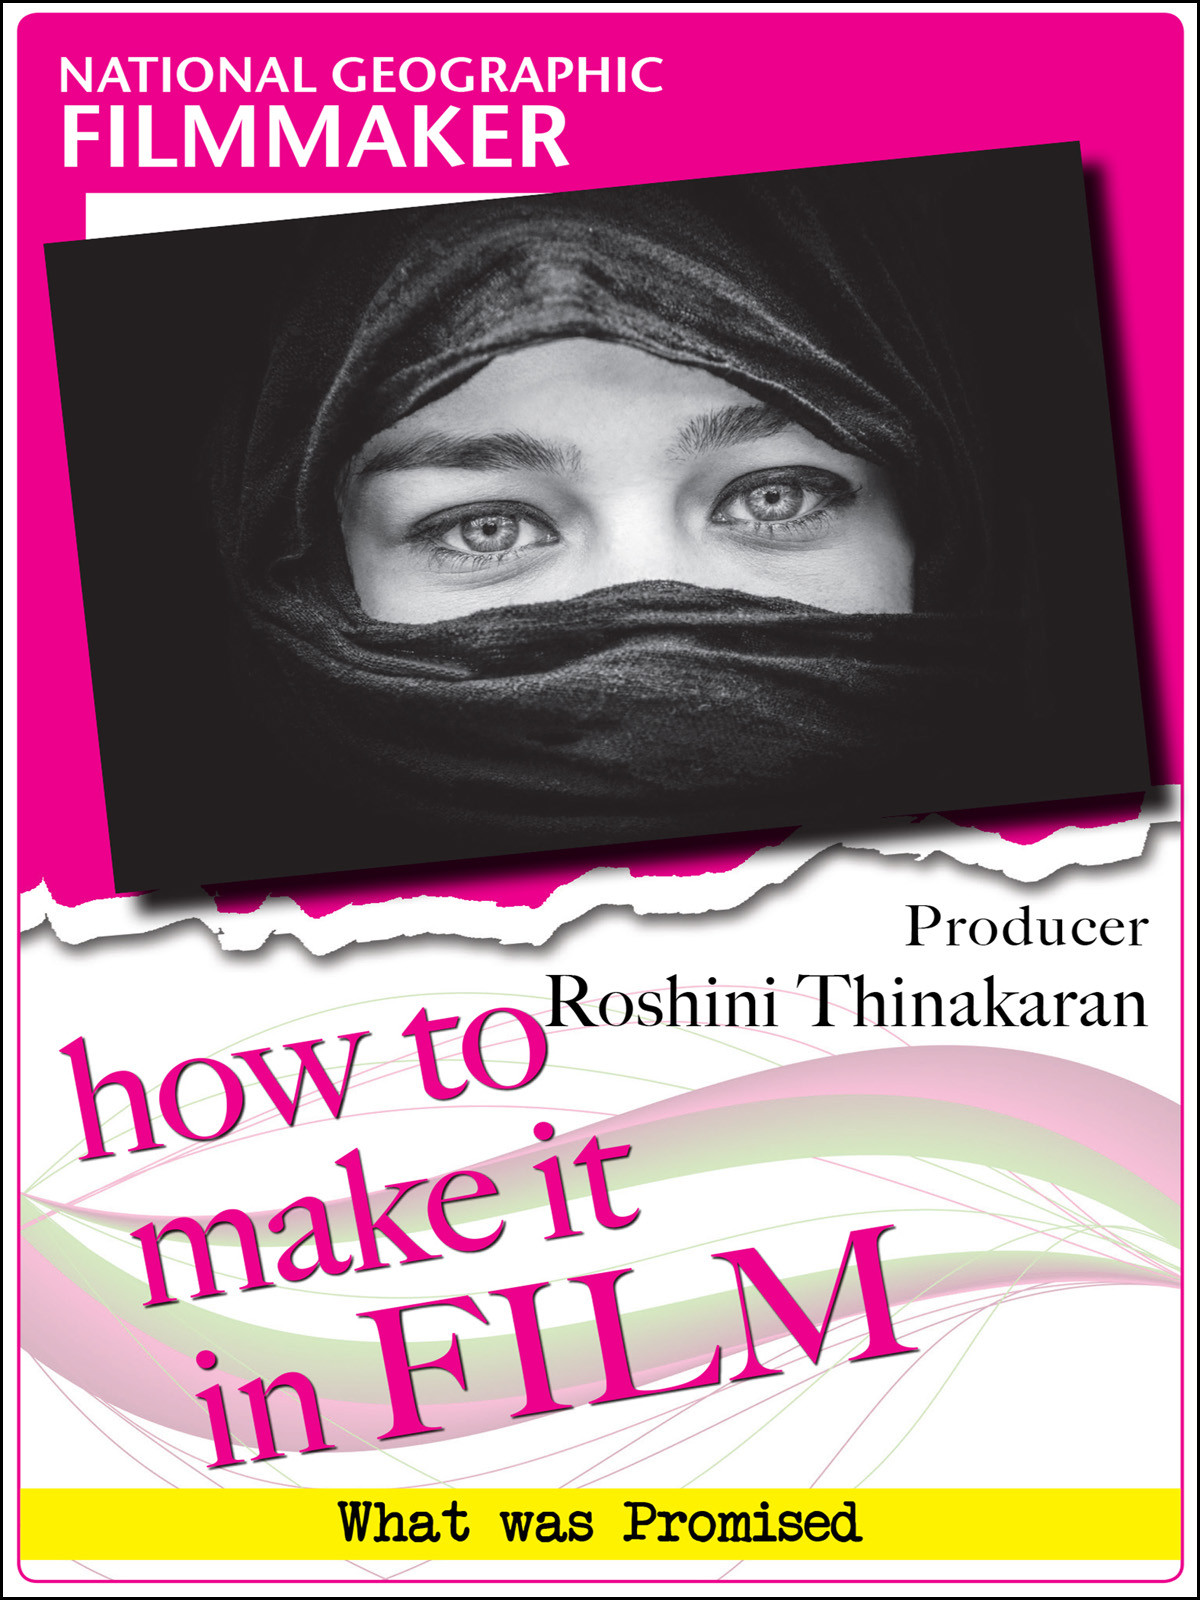 F2832 - National Geographic Filmmaker Producer Roshini Thinakaran